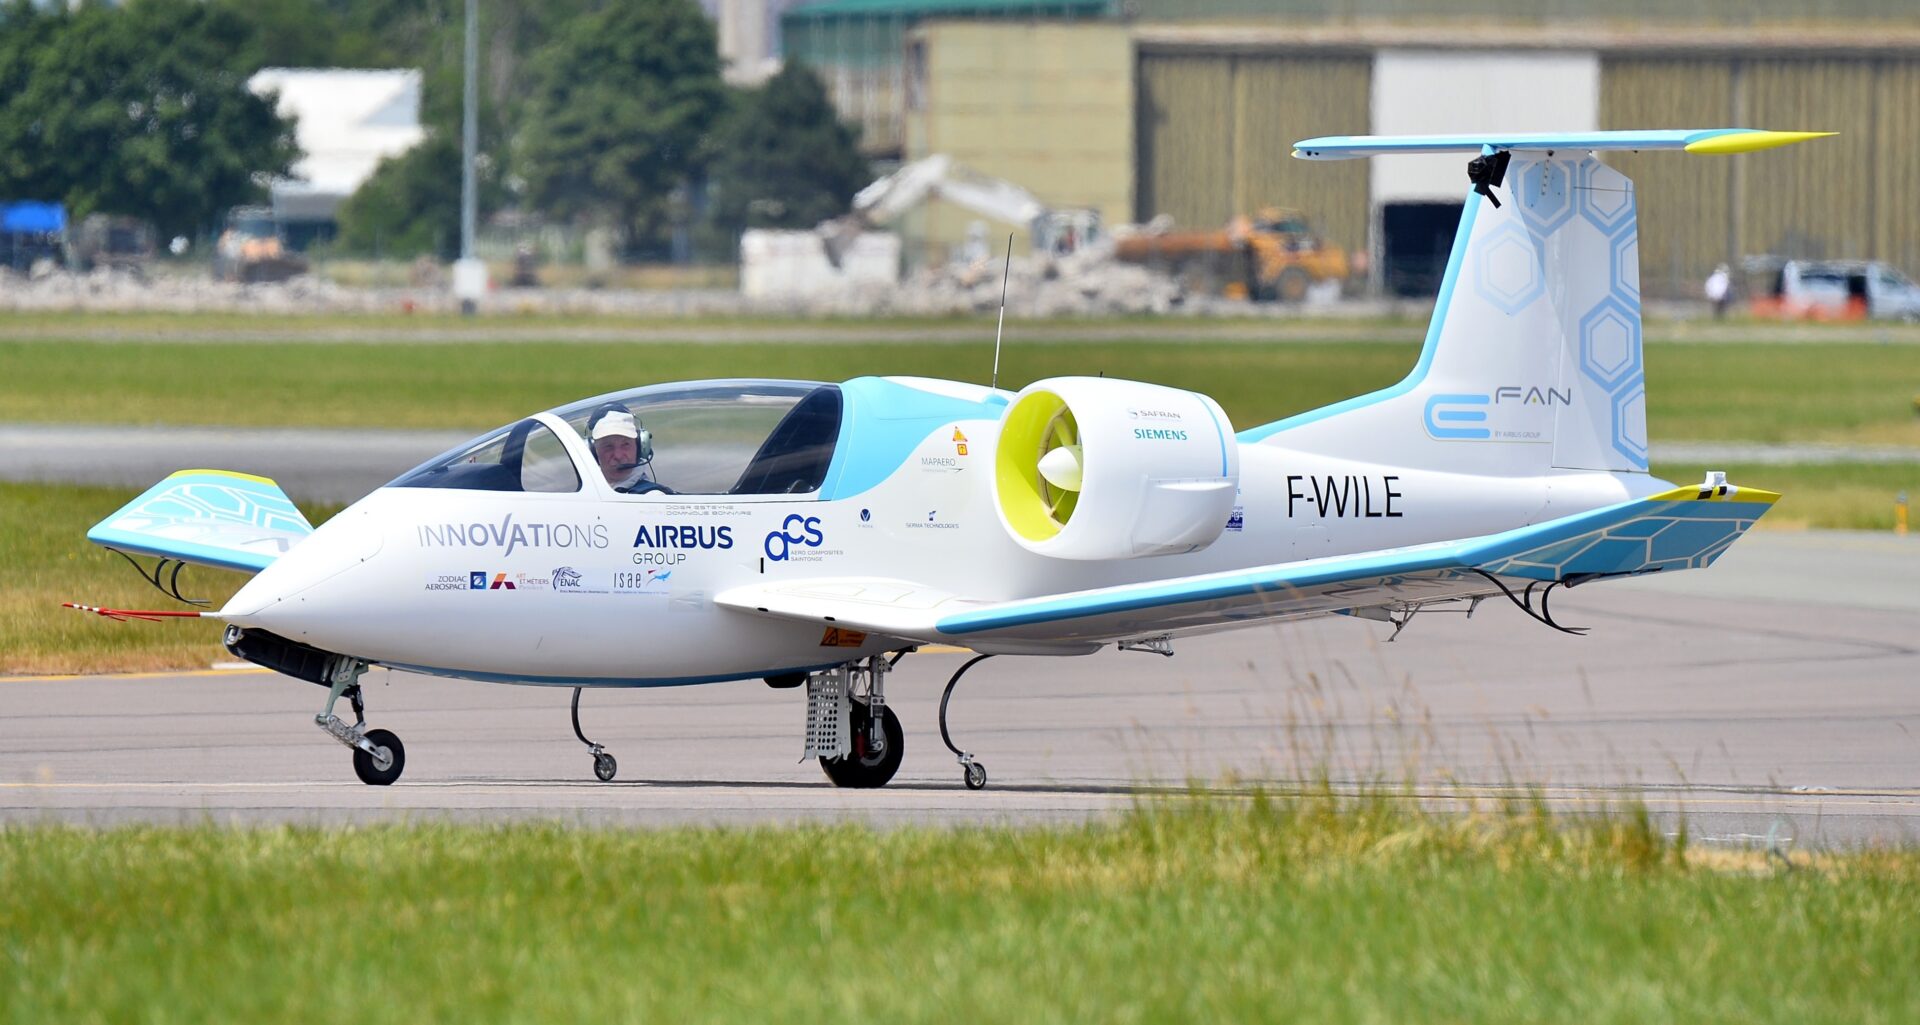 Airbus E-Fan electric aircraft